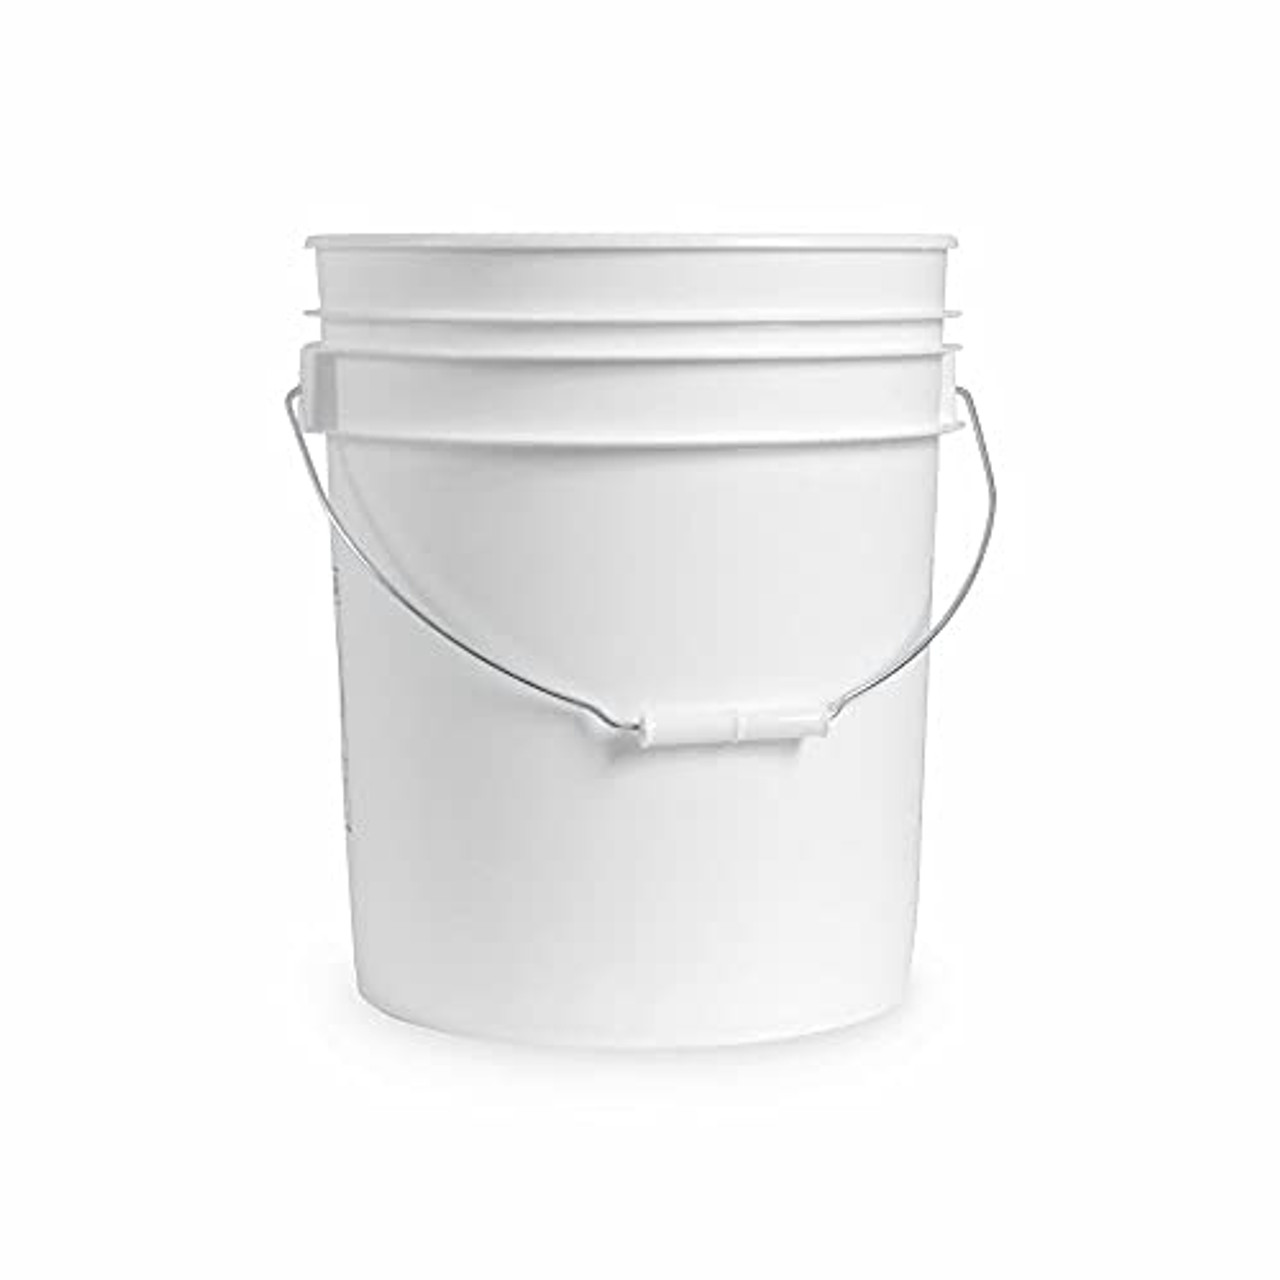 1 Gallon Bucket With Lid - Food Grade Buckets